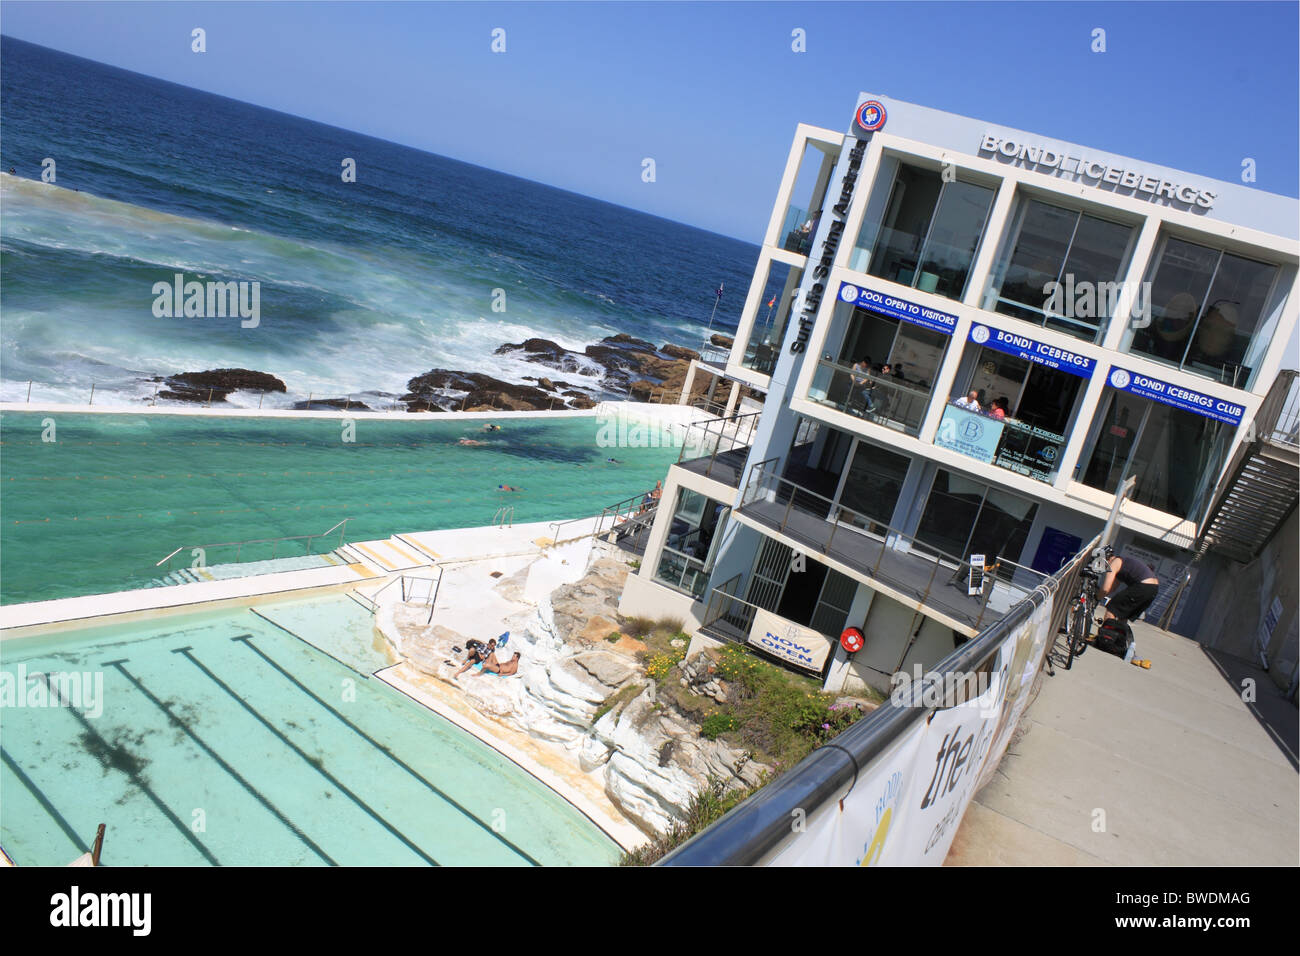 Bondi Icebergs Swimming Club, Bondi Beach, Sydney, New South Wales, NSW, east Australia, Australasia Stock Photo